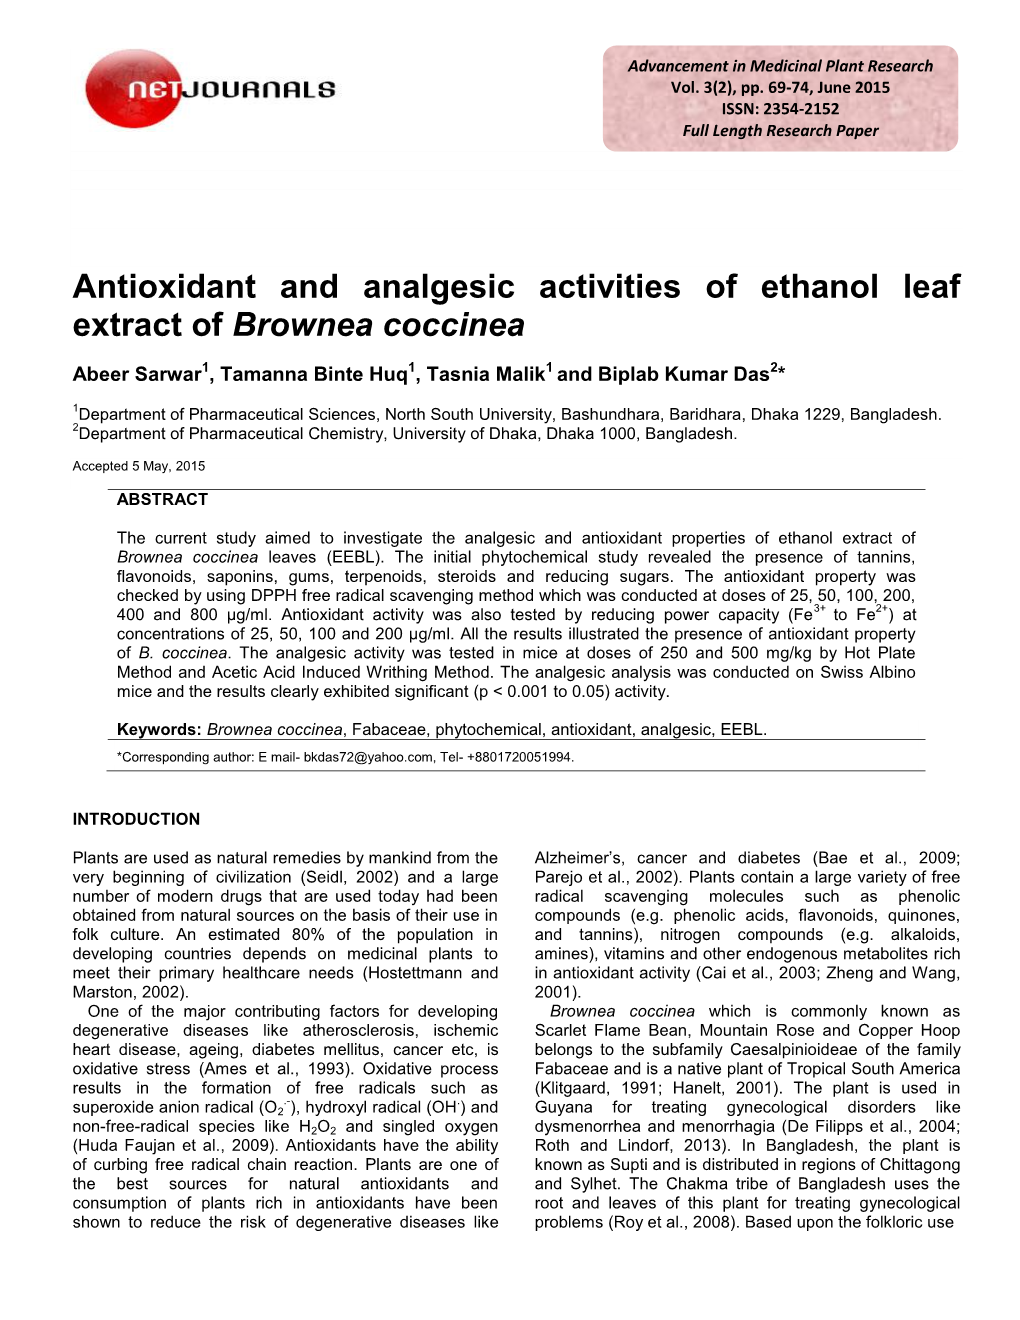 Antioxidant and Analgesic Activities of Ethanol Leaf Extract of Brownea Coccinea